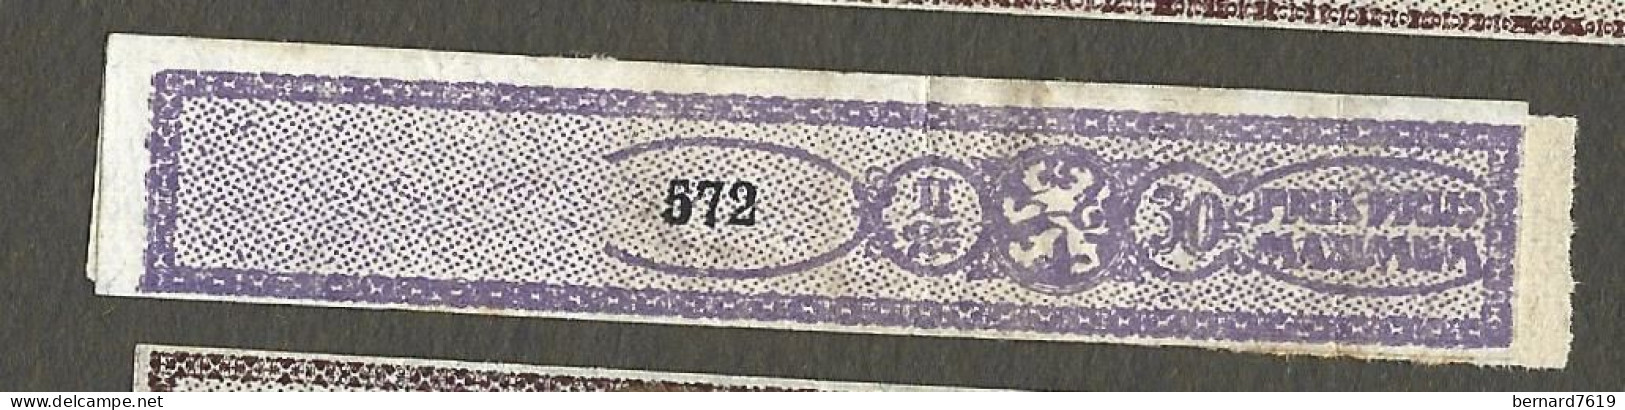 Timbre Taxe  - Tabac -belgique - - Prix Pruss Maximun - Annee 1870 - 1900 - Postzegels